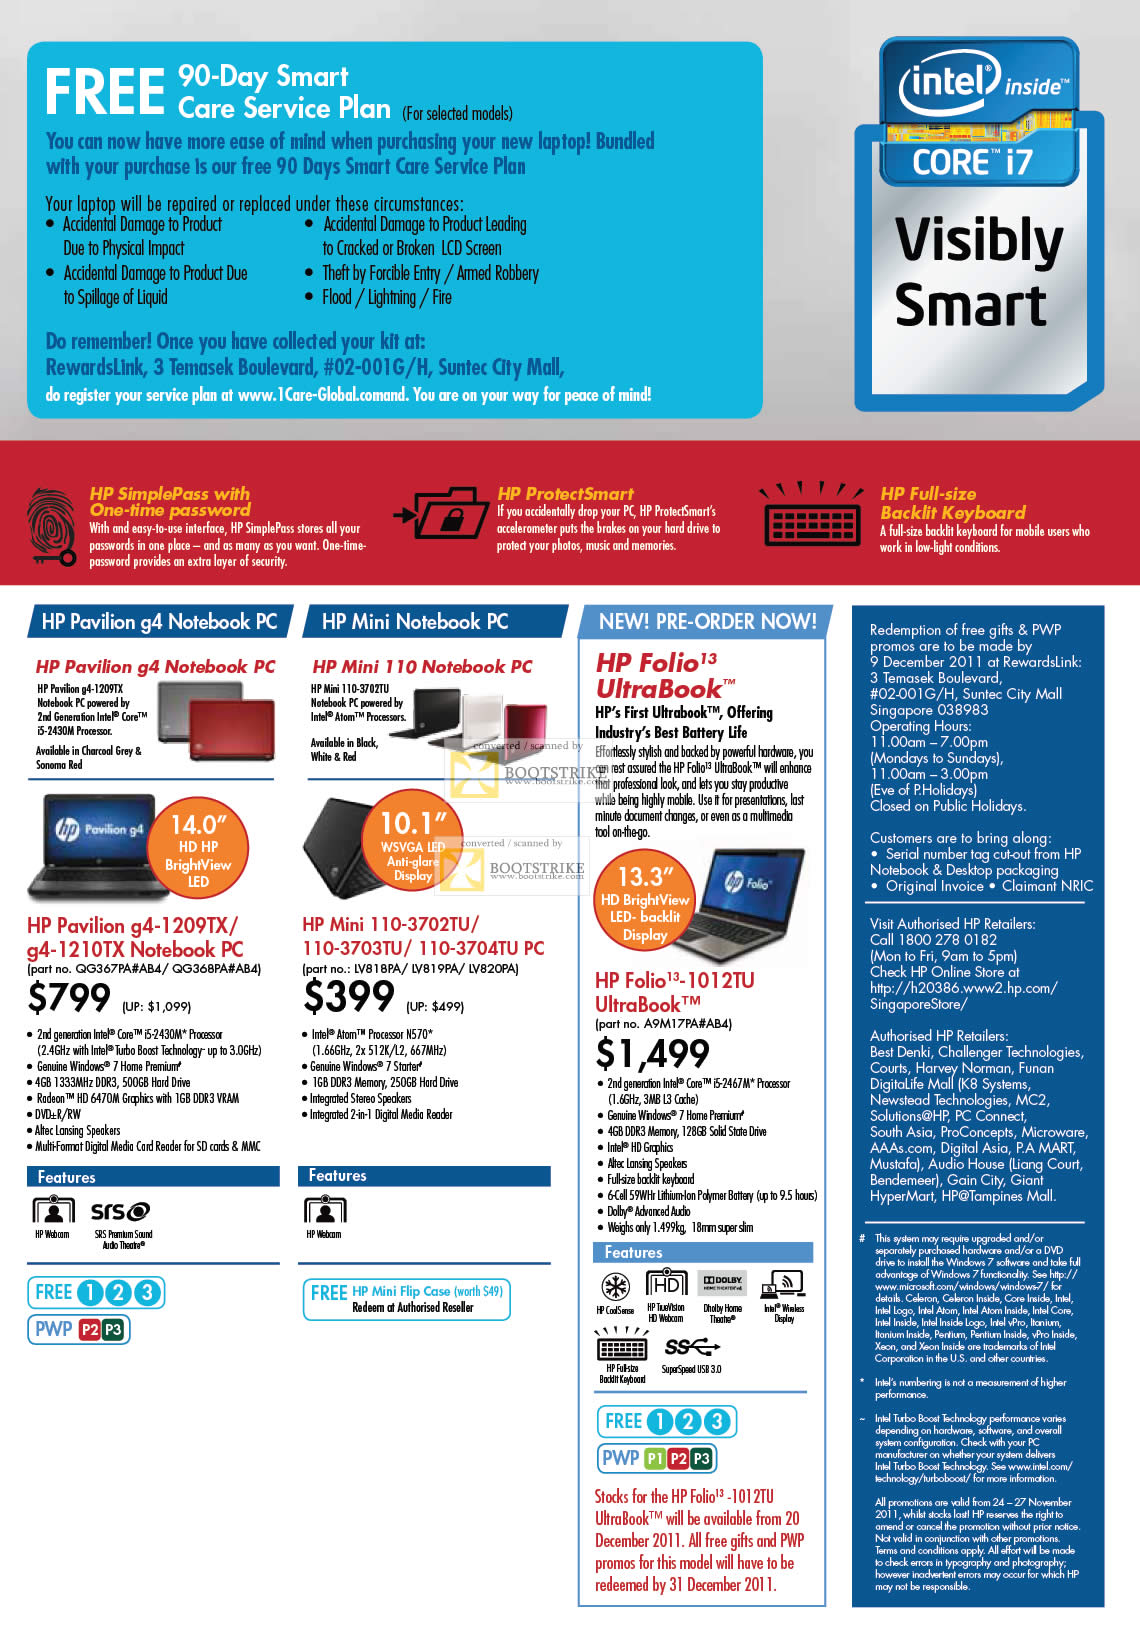 SITEX 2011 price list image brochure of HP Notebooks Pavilion G4-1209TX, G4-1210TX, Mini 110-3702TU, 110-3703TU, 110-3704TU, Folio13-1012TU Ultrabook